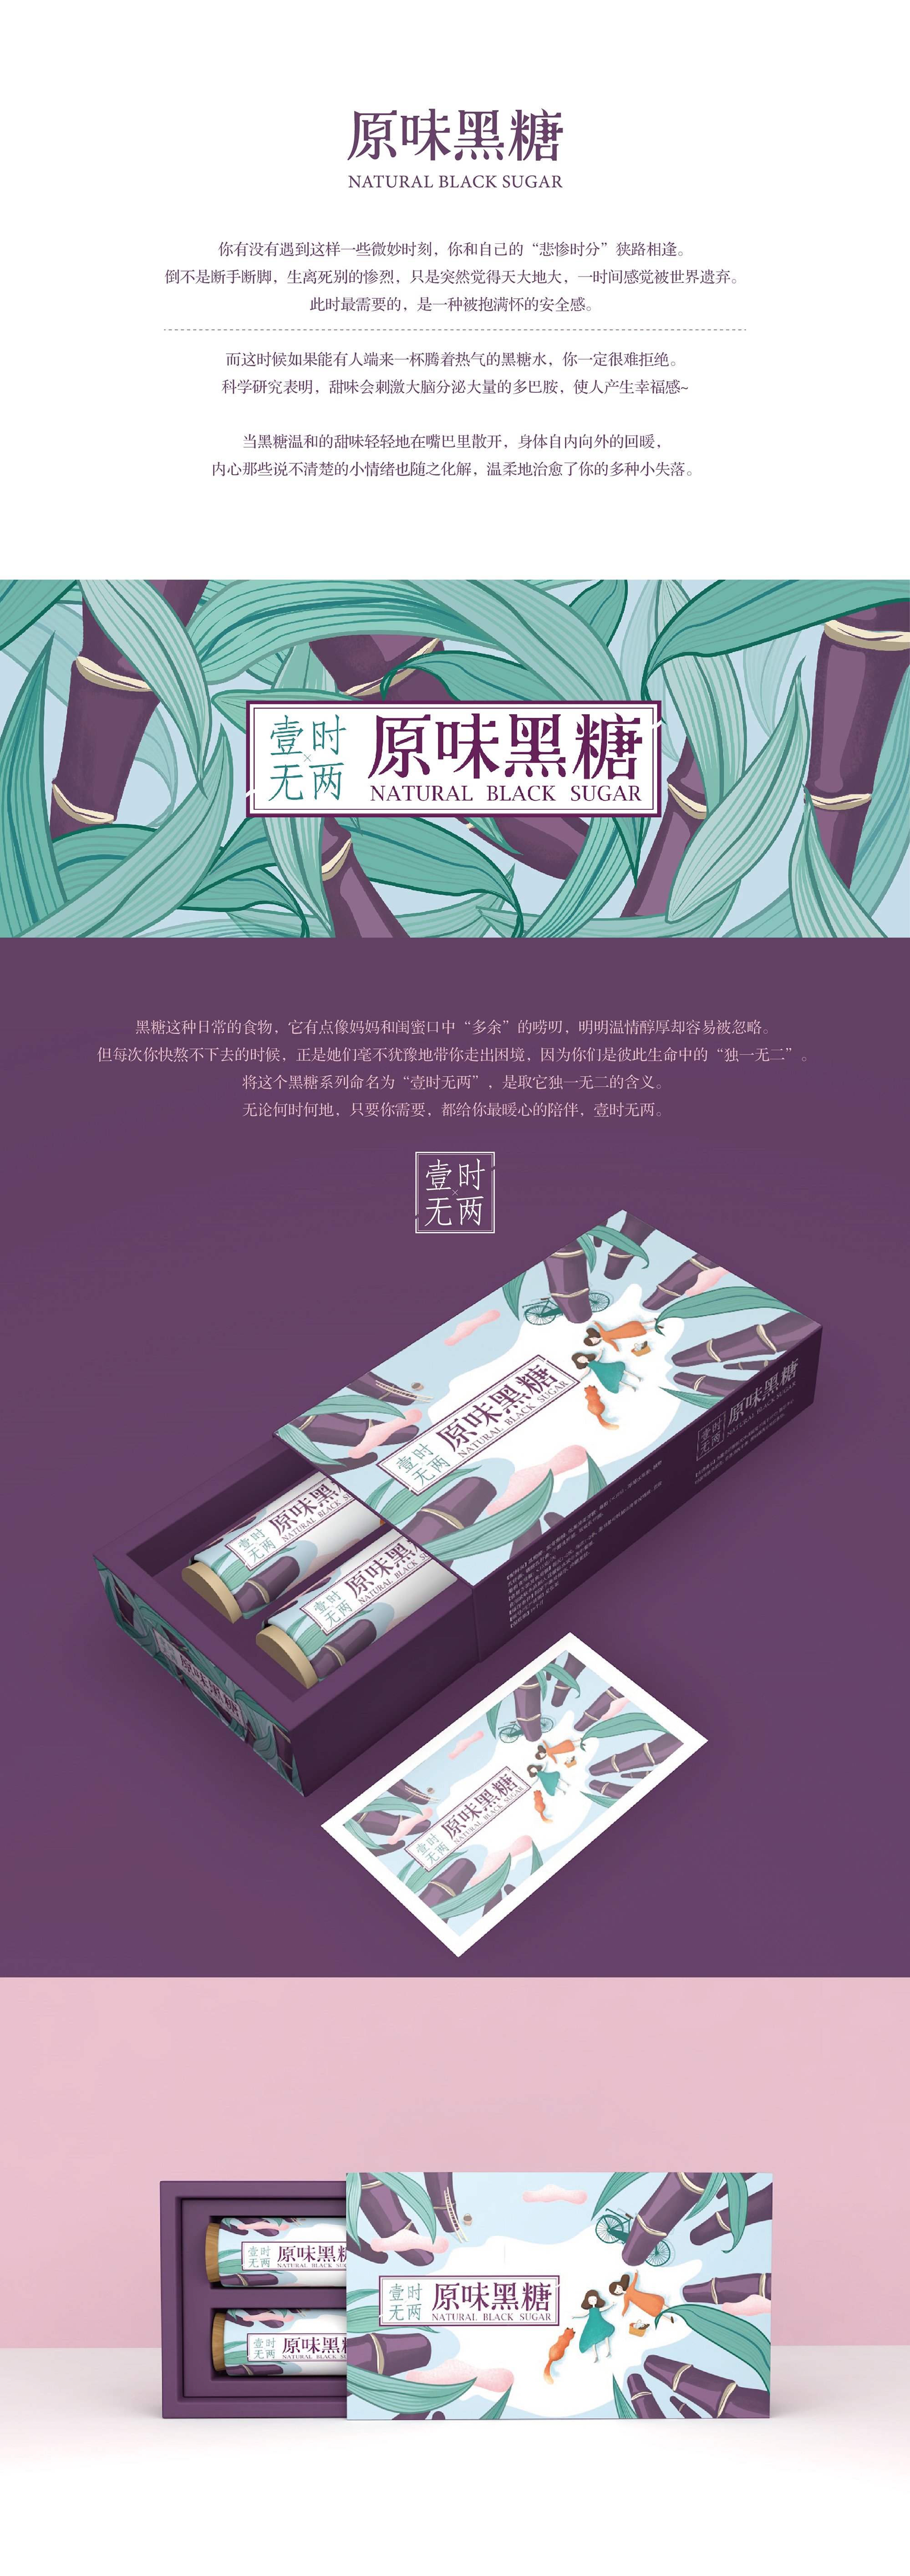 6P Packaging Design of Black Sugar